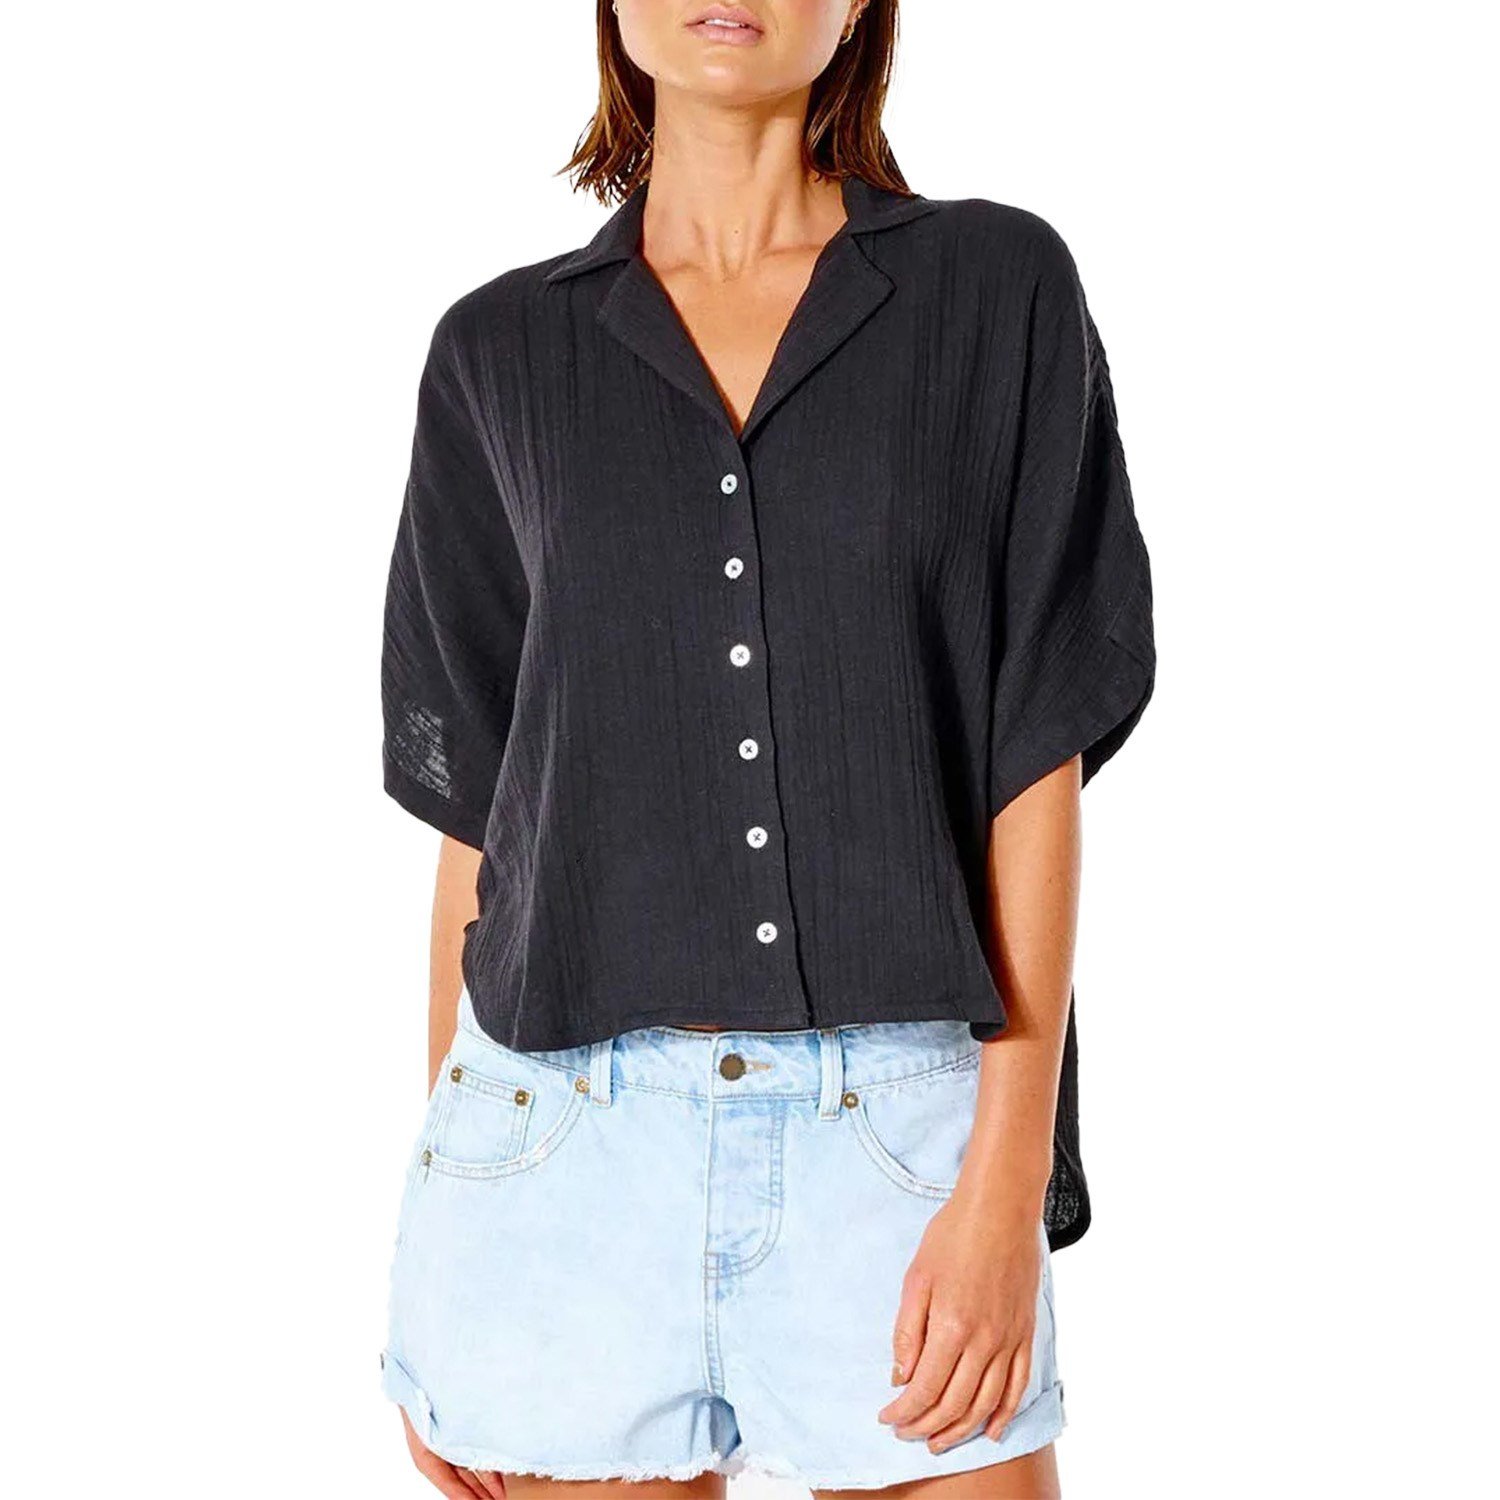 Рубашка Rip Curl Premium Surf Short-Sleeve, черный рубашка rip curl apex s s shirt цвет 3021 bone размер m